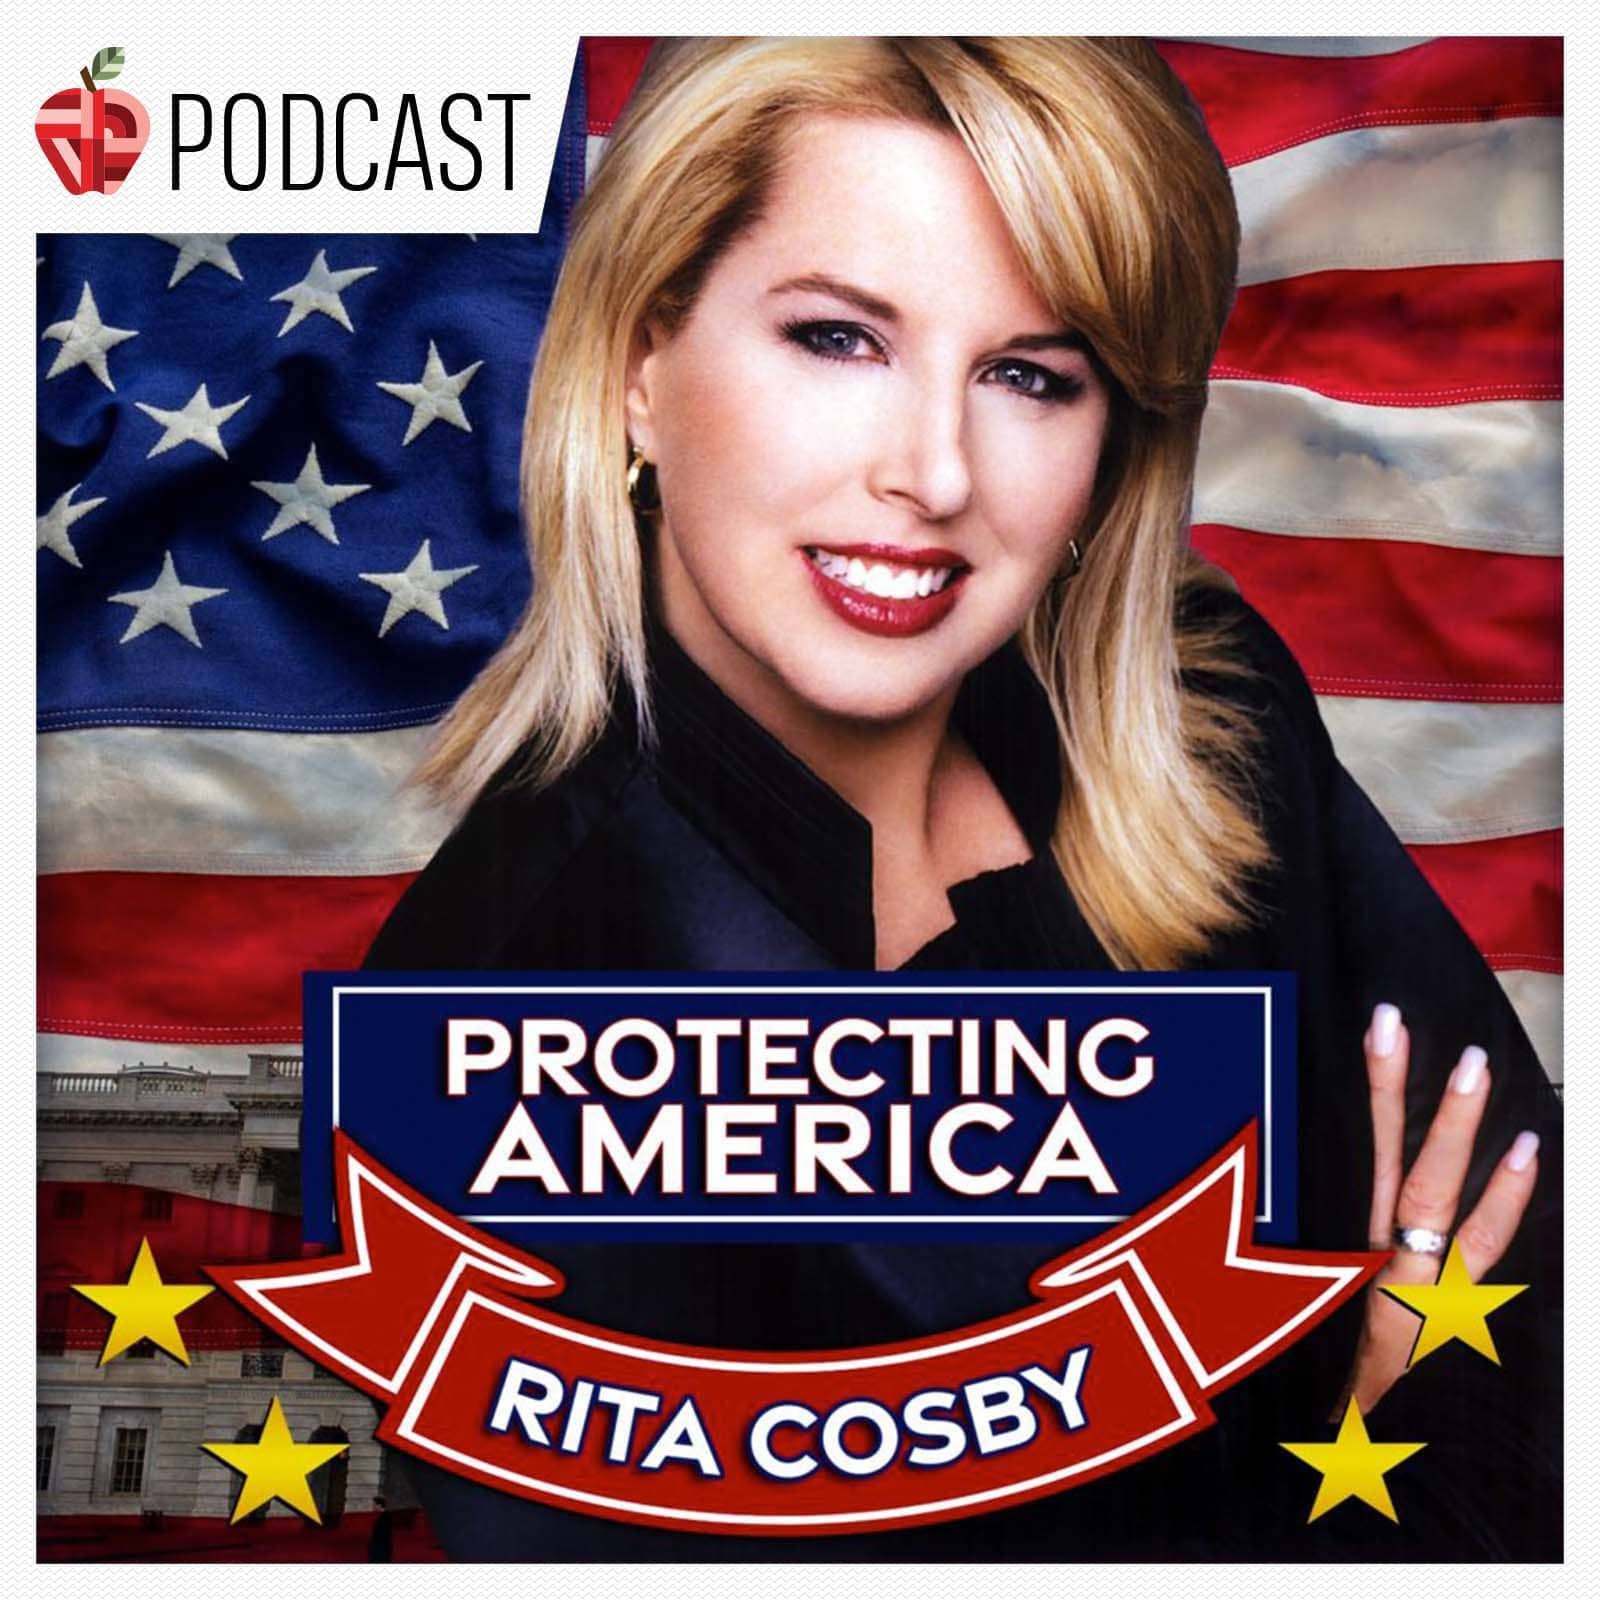 rita-cosby-protecting-america-correct-podcast-new-logo-27